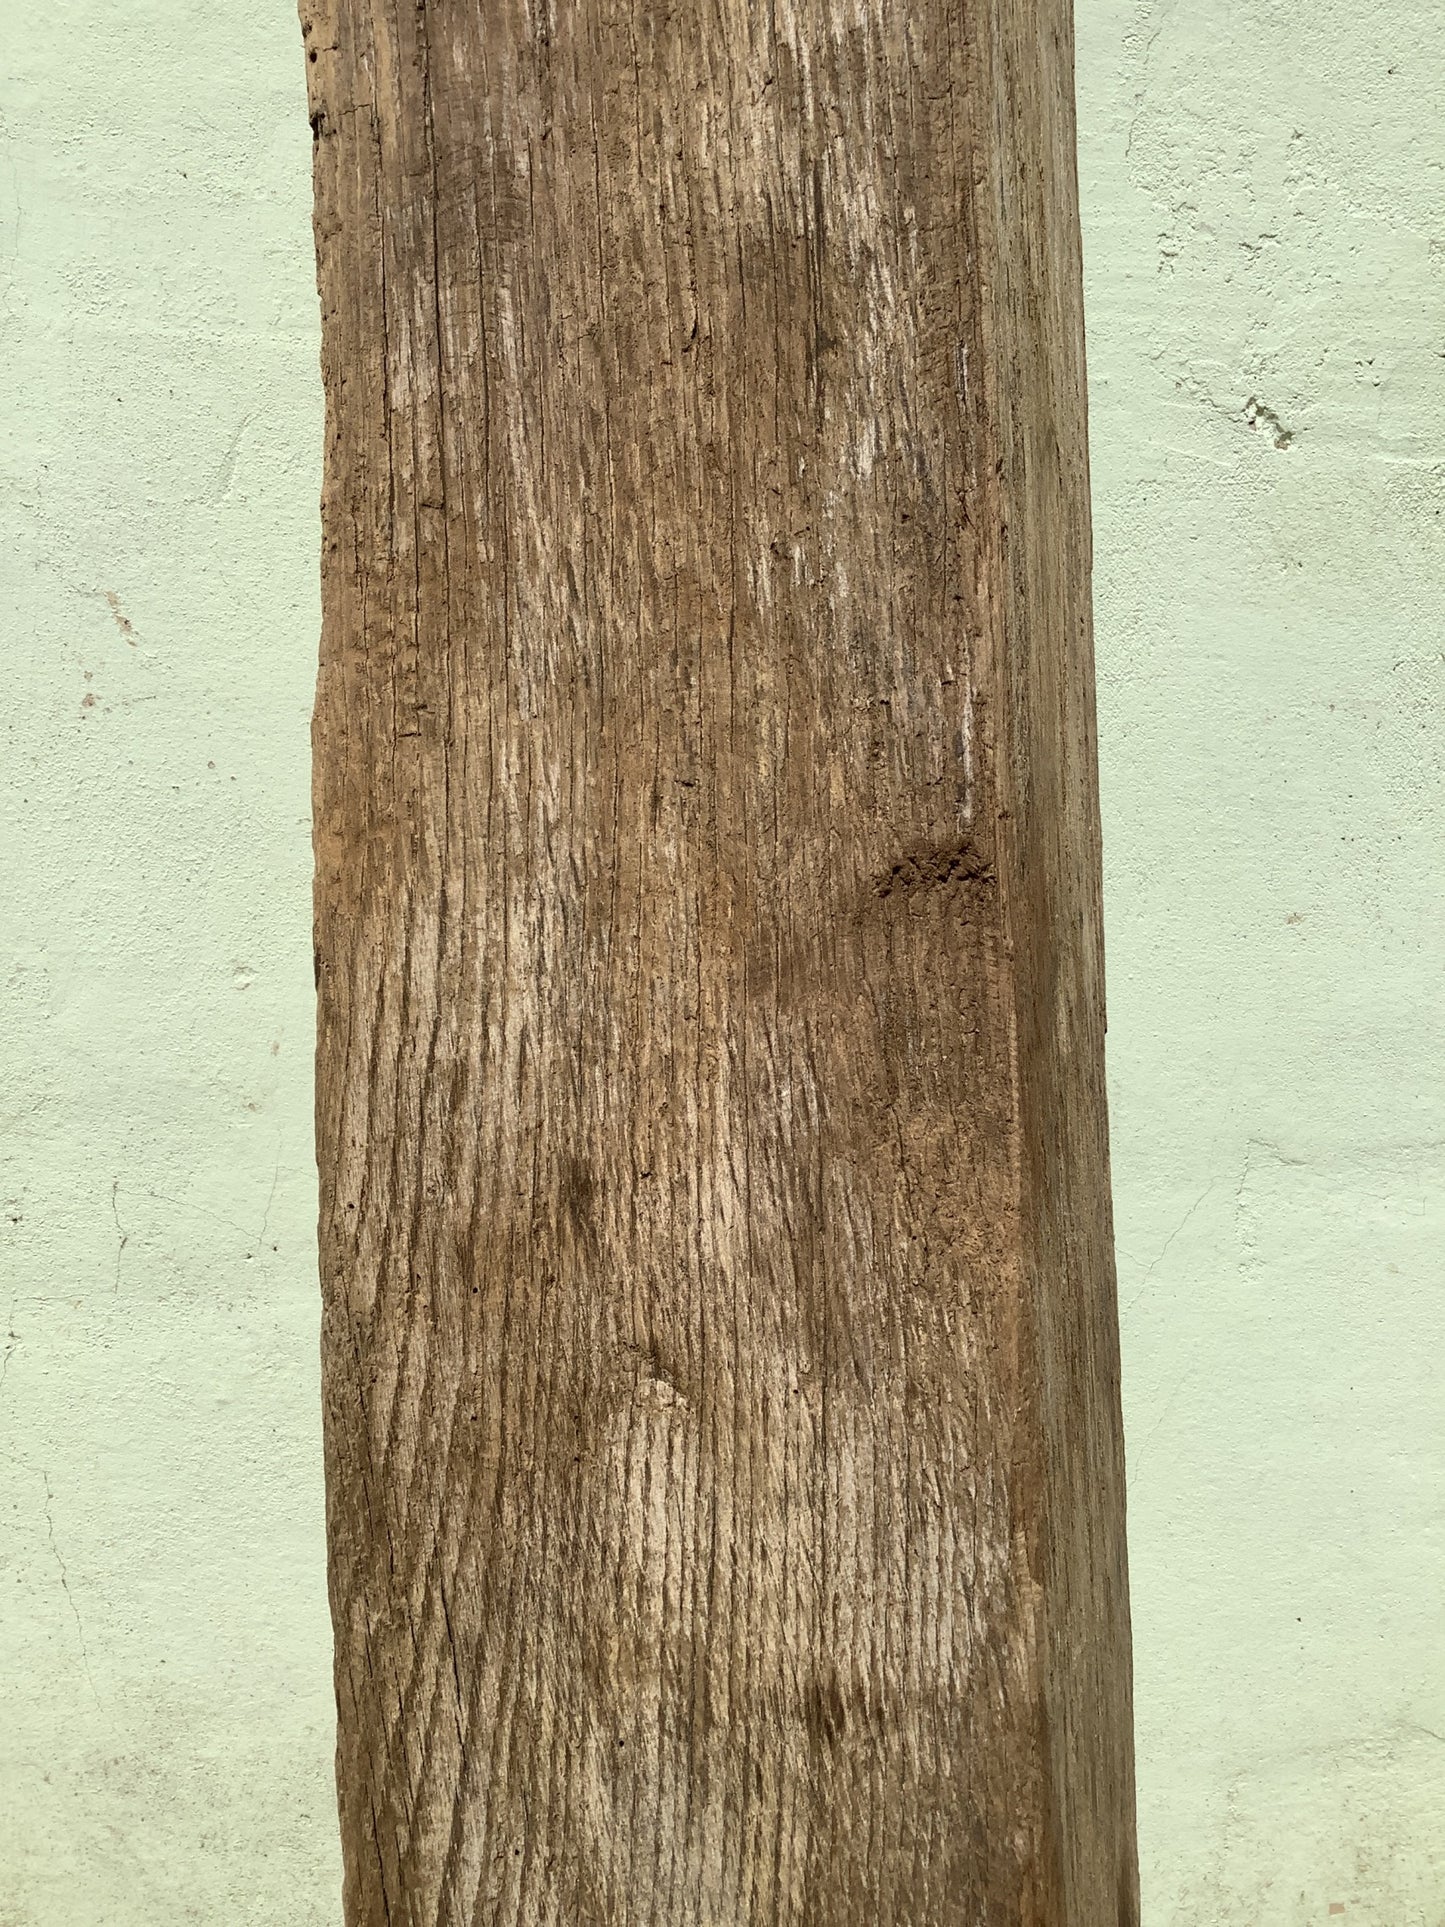 4'3" Long Old Solid English Oak Reclaimed Seasoned Rustic Fireplace Beam Post